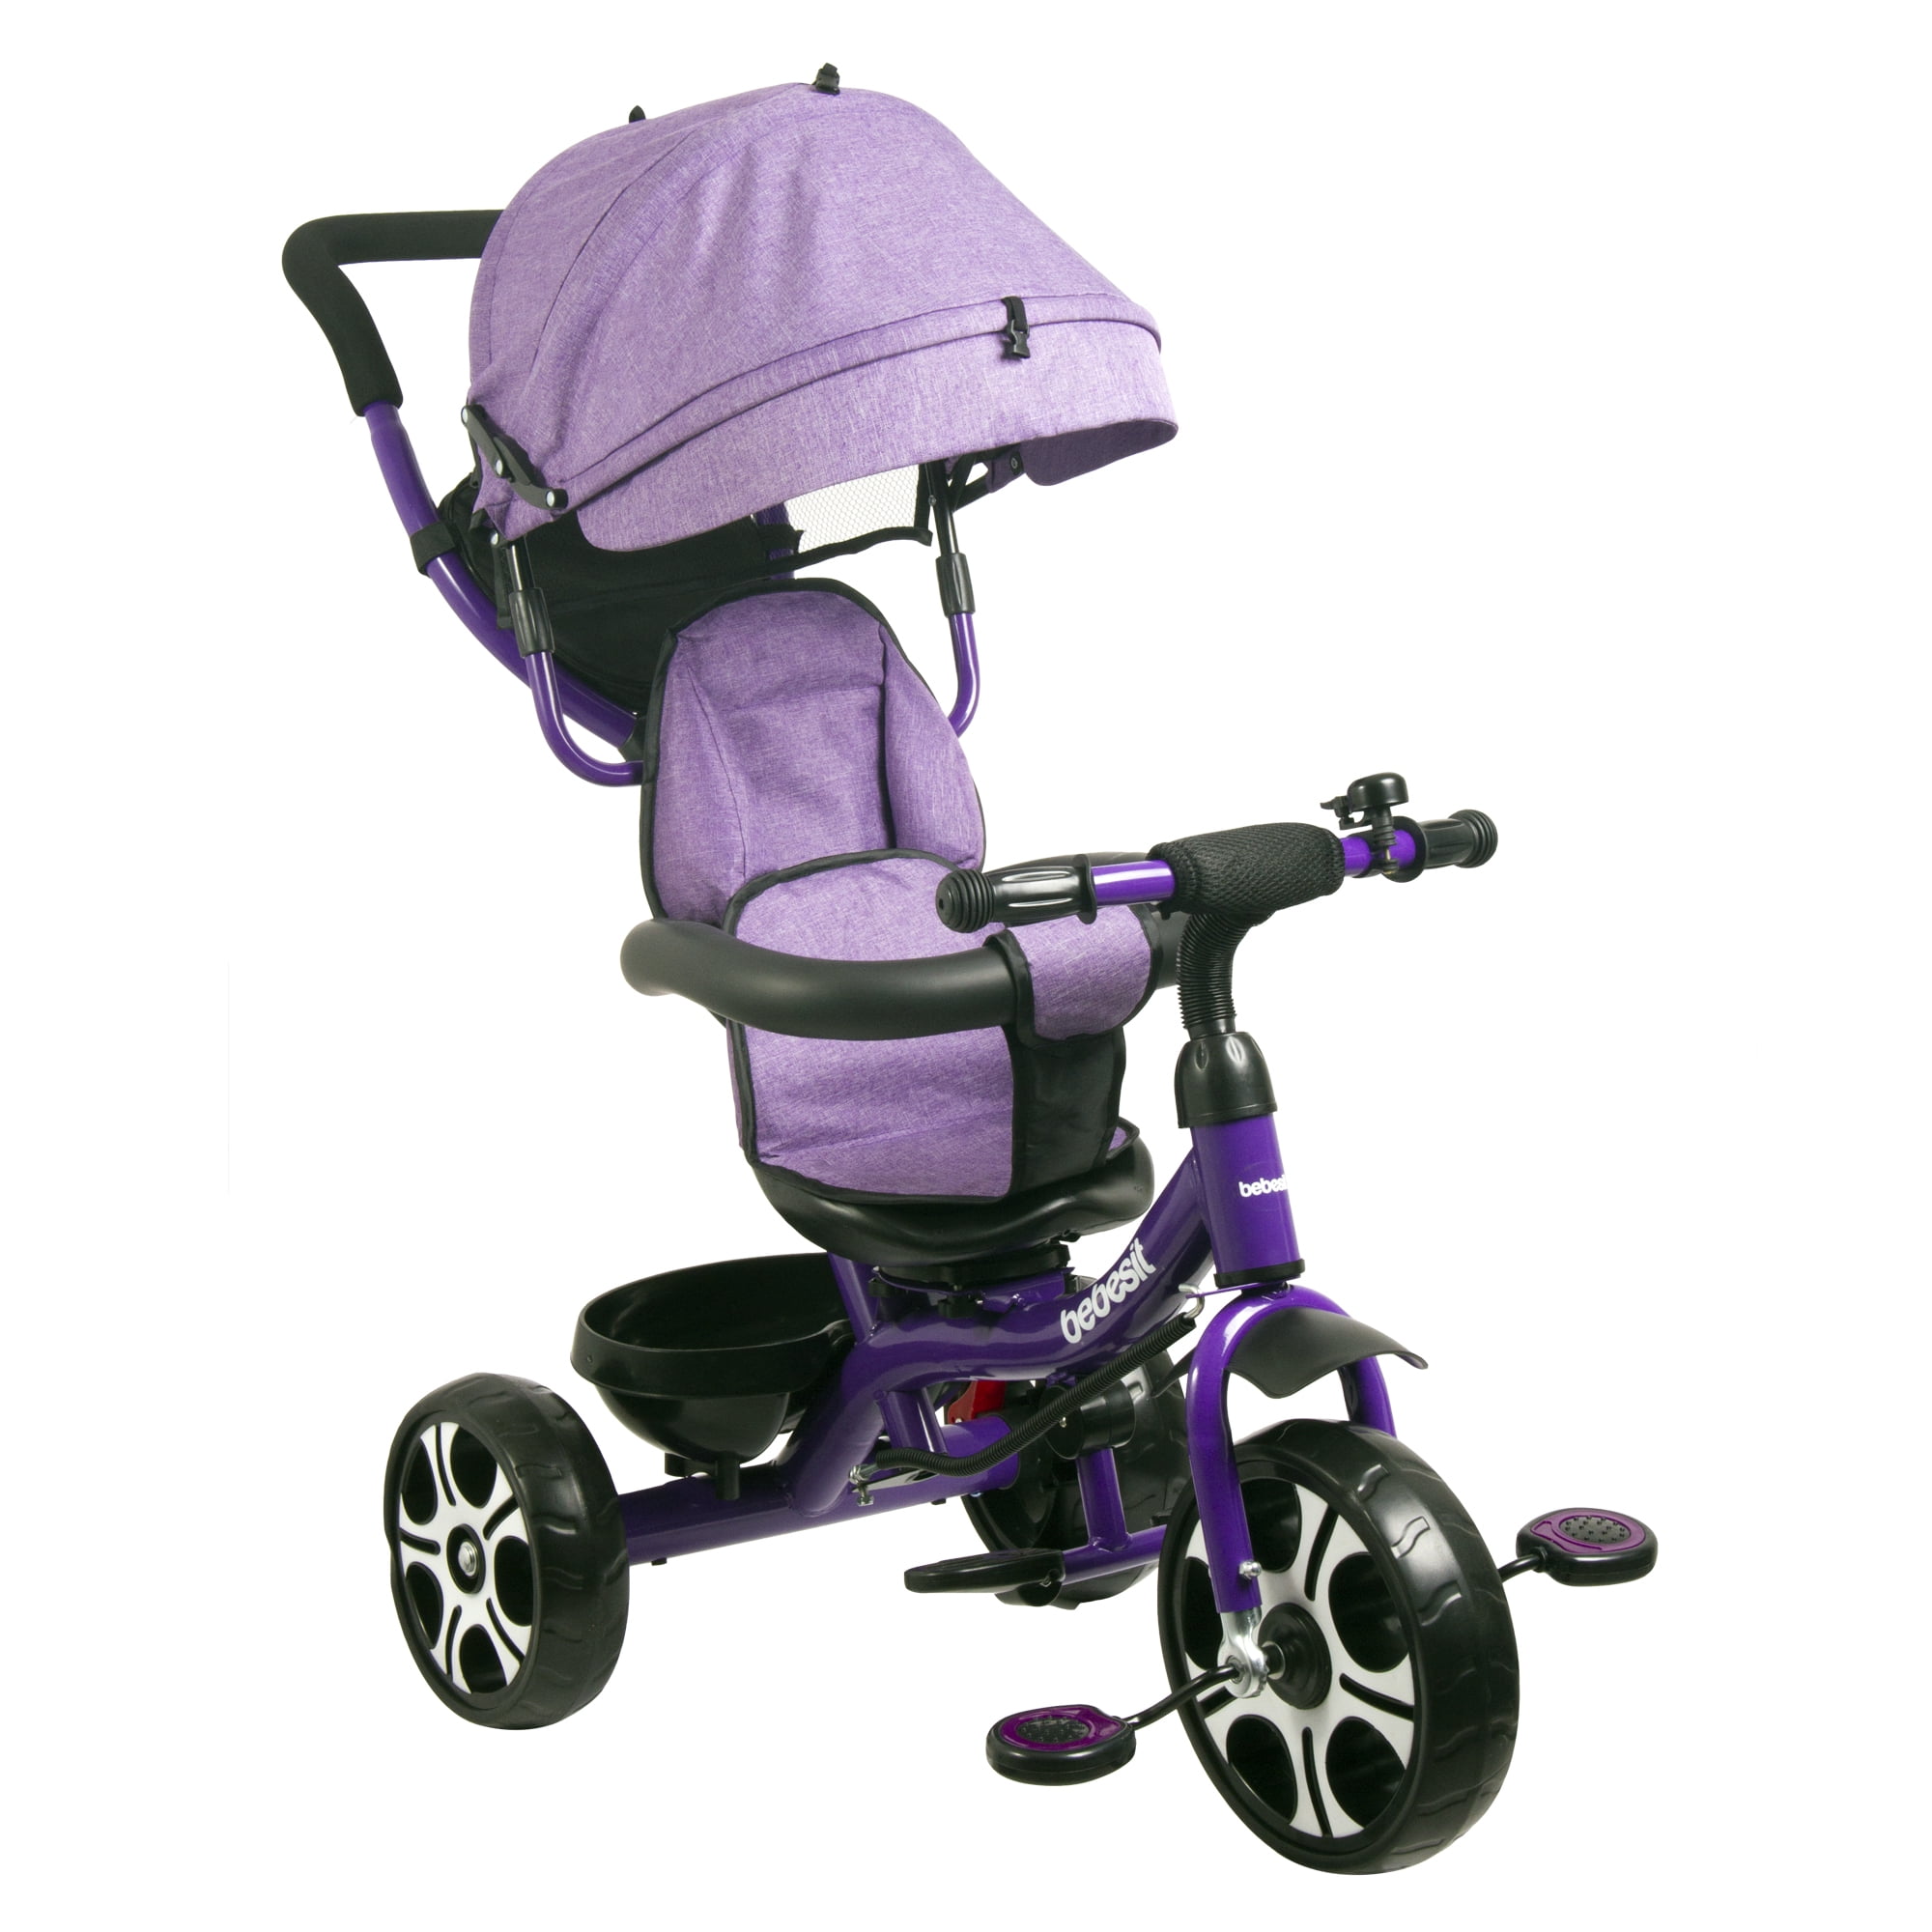 GLOBAL LATIN GROUP Triciclo Coche Para Bebé - Purpura - S